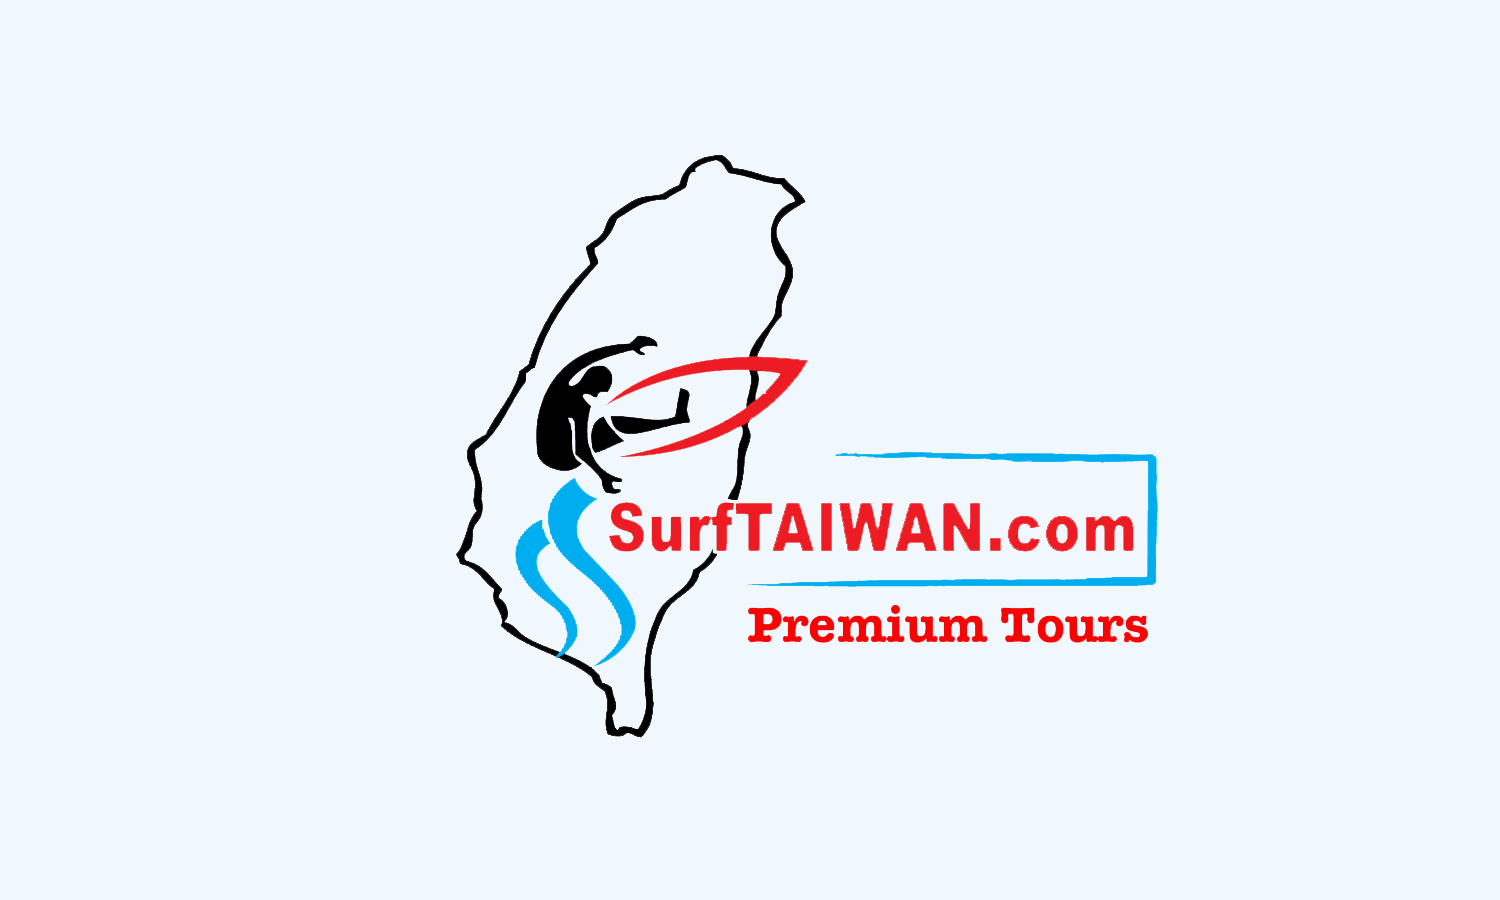 (c) Surftaiwan.com